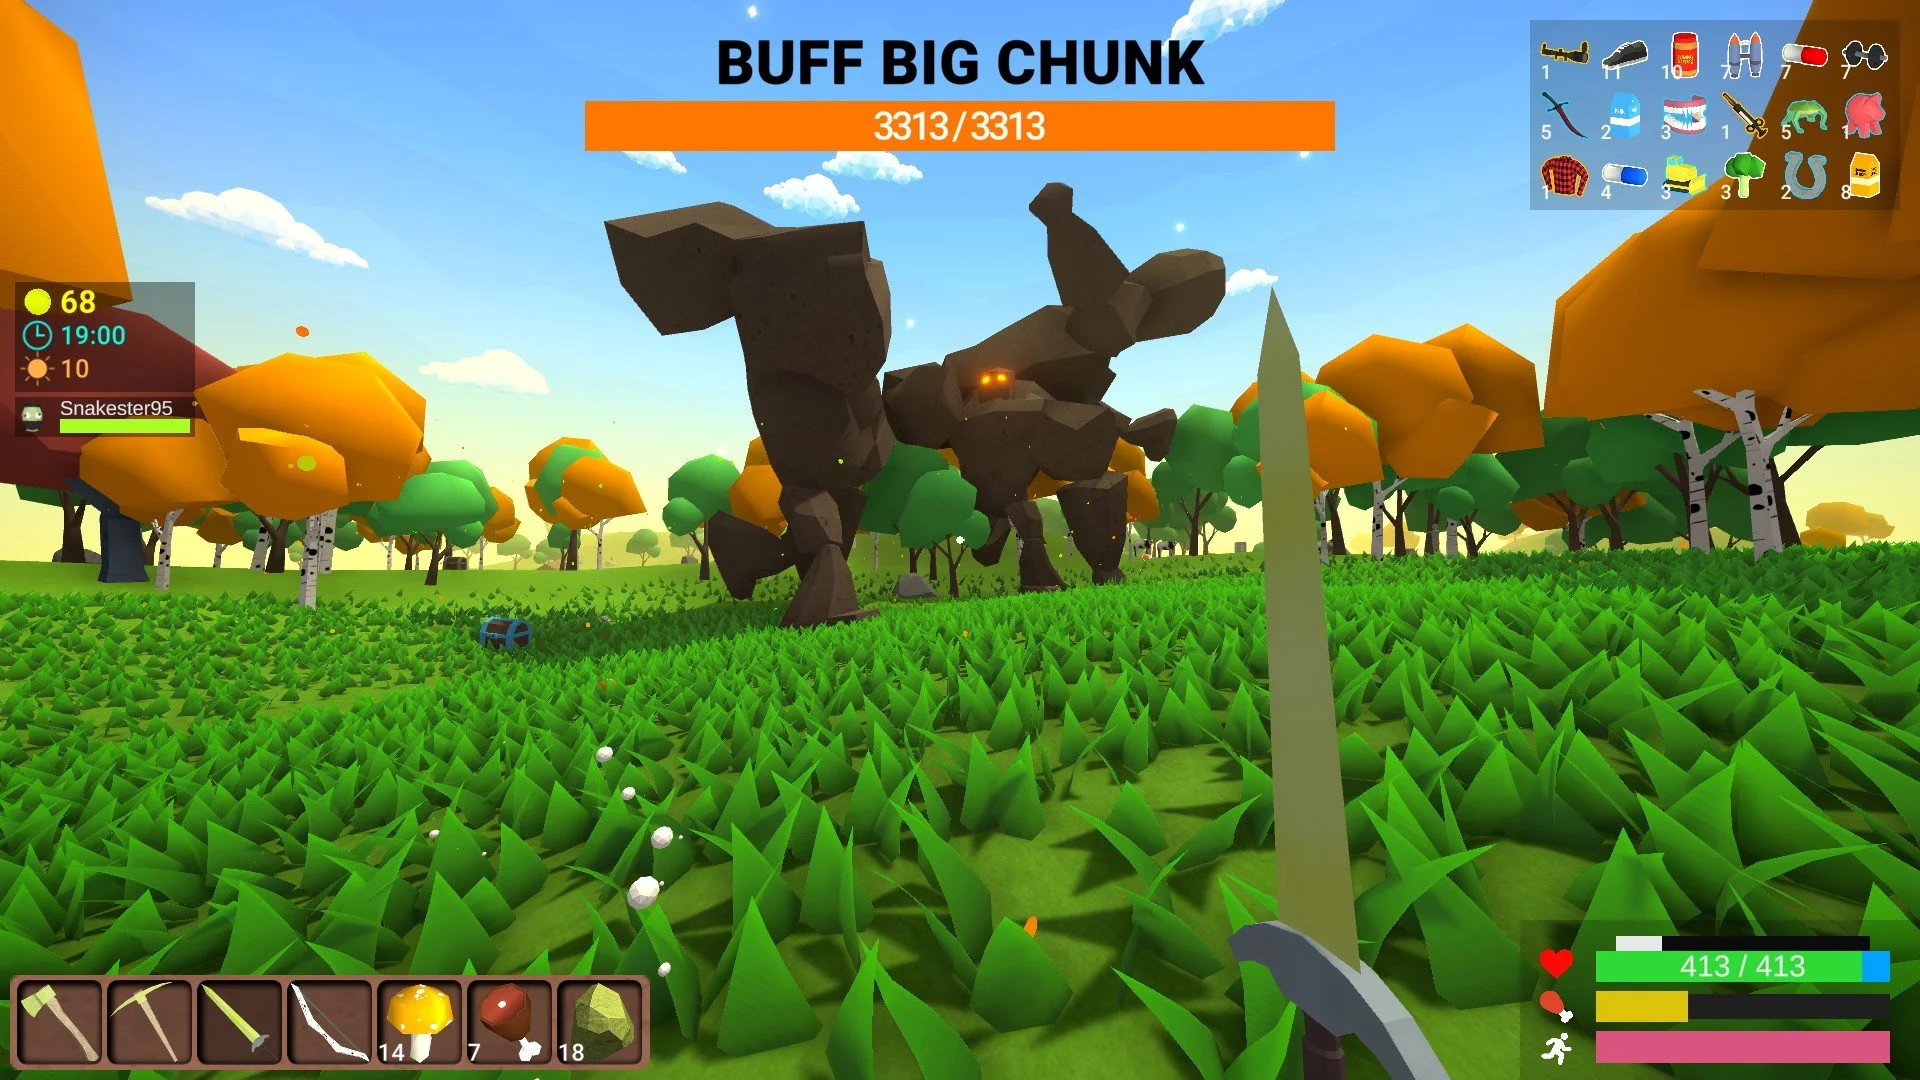 Muck - Buff Big Chunk Screenshot